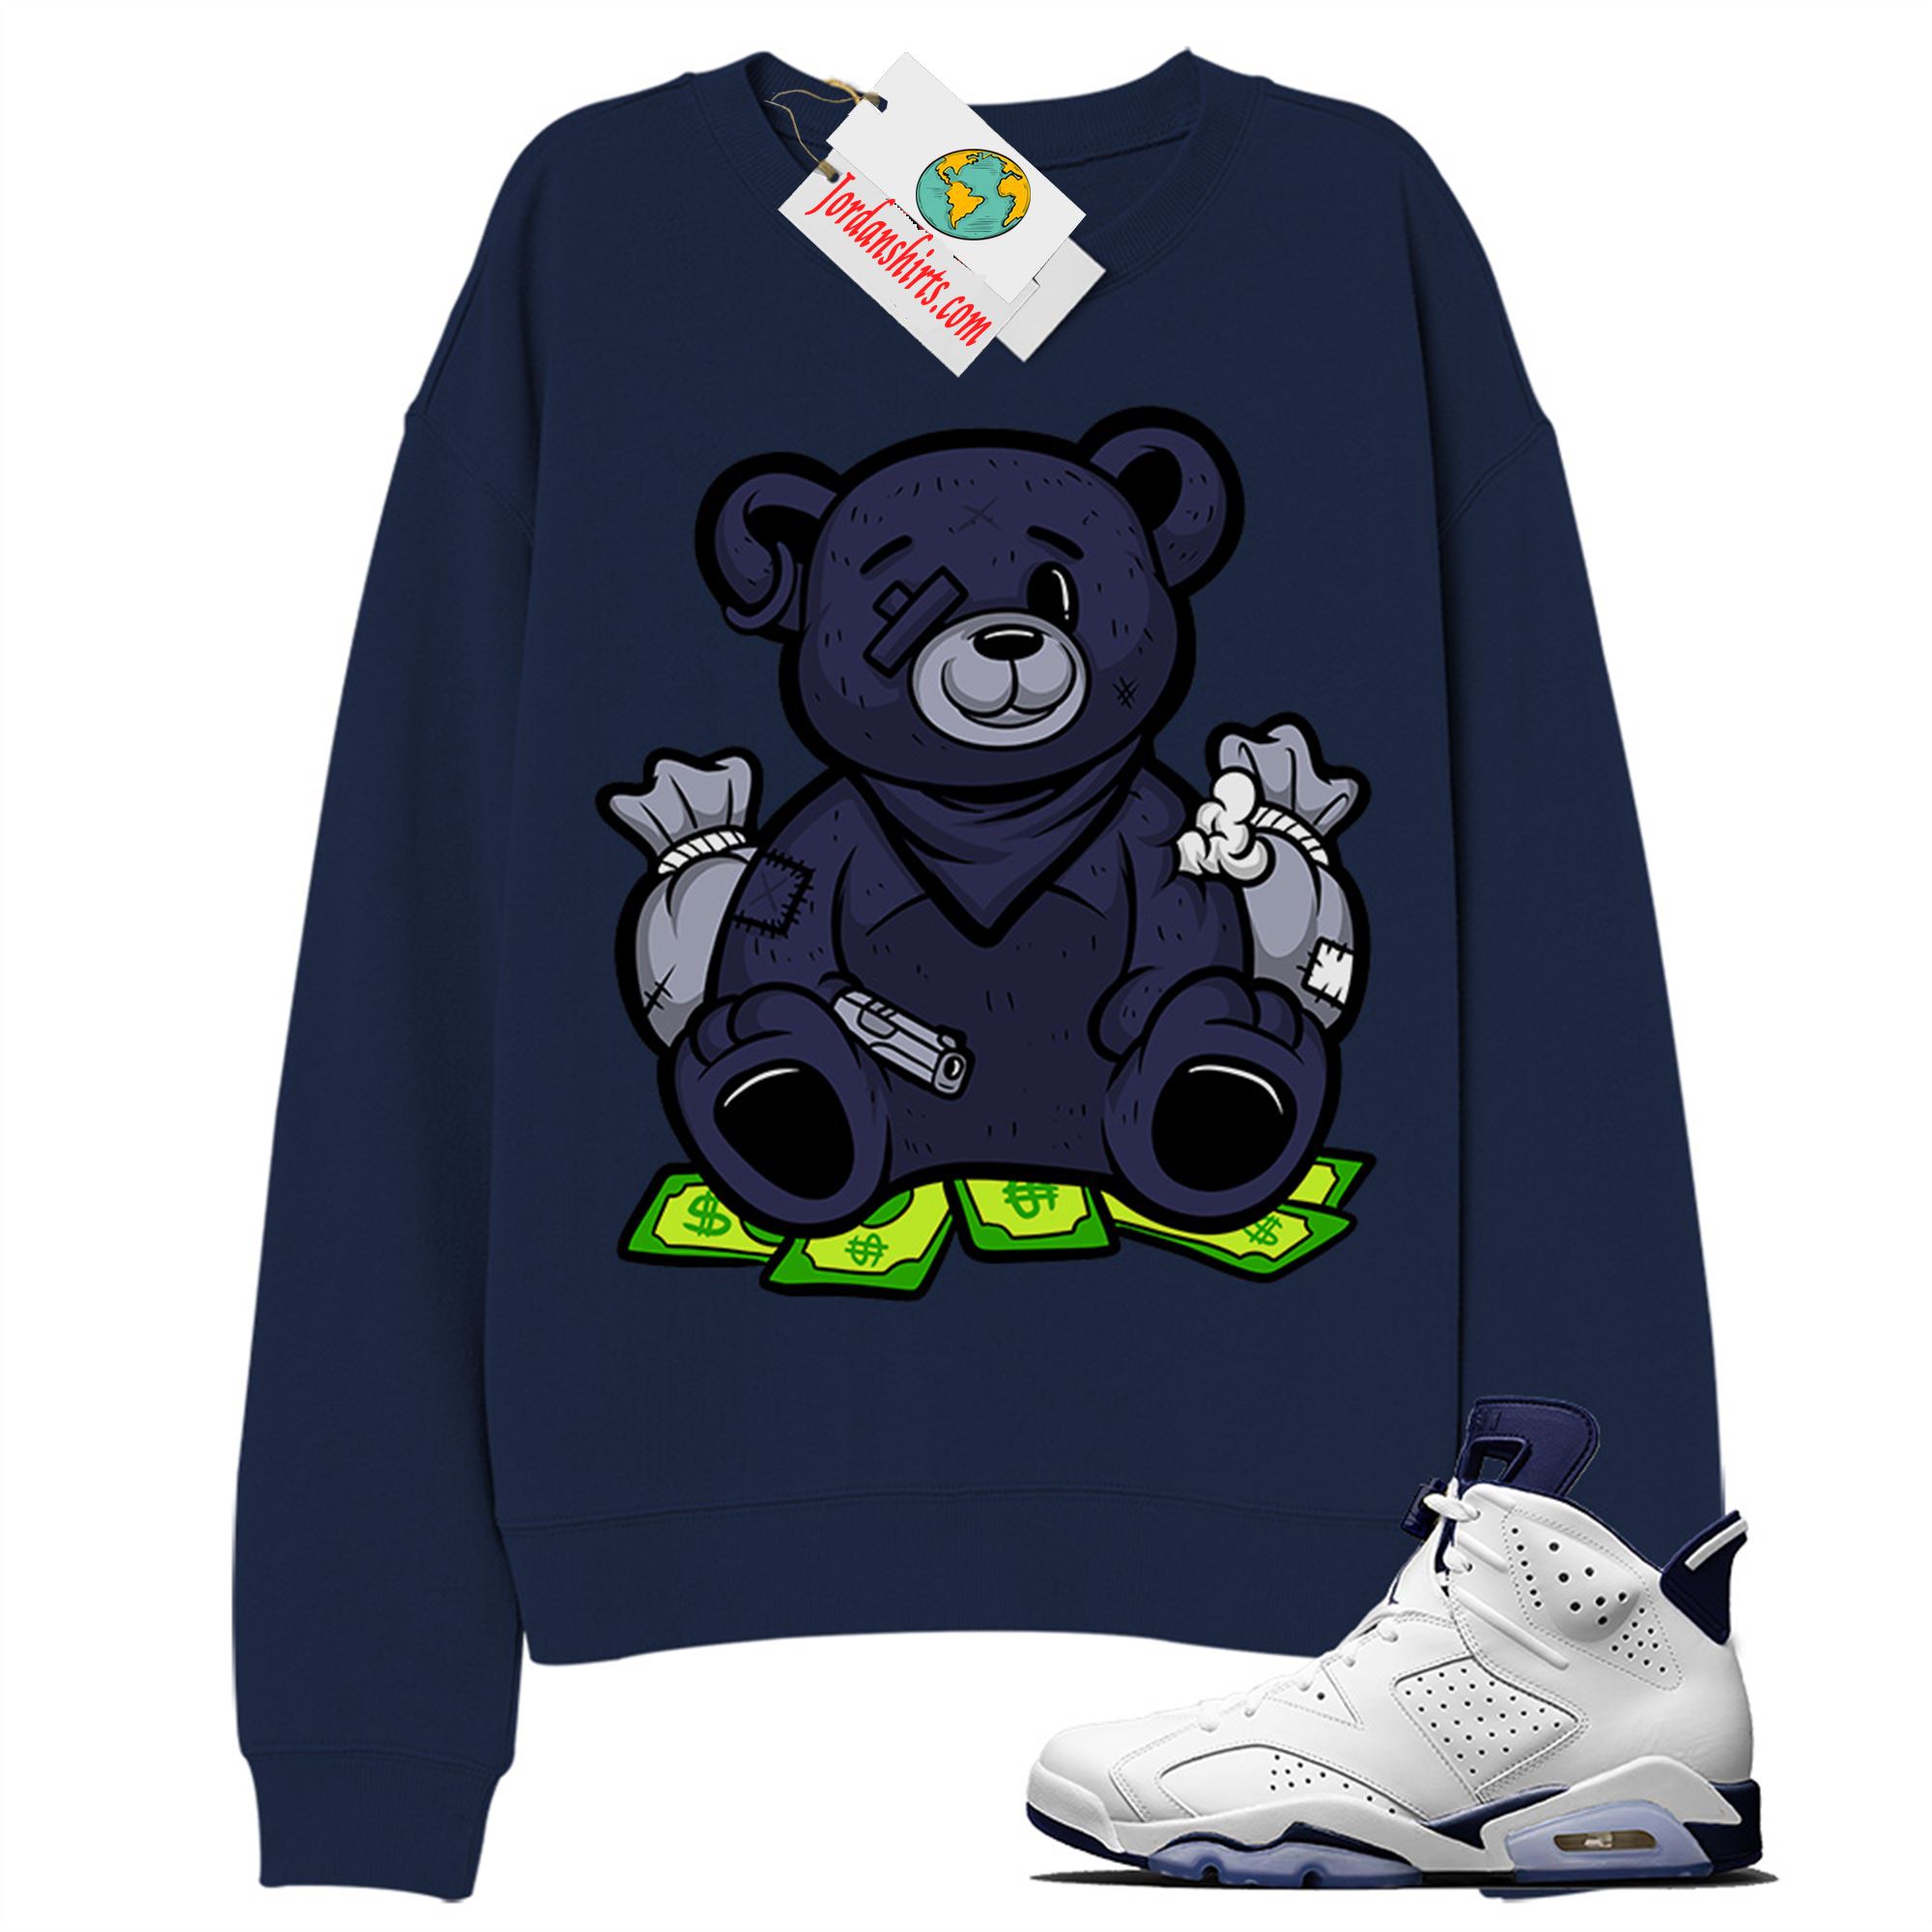 Jordan 6 Sweatshirt, Rich Teddy Bear Gangster Navy Sweatshirt Air Jordan 6 Midnight Navy 6s Size Up To 5xl